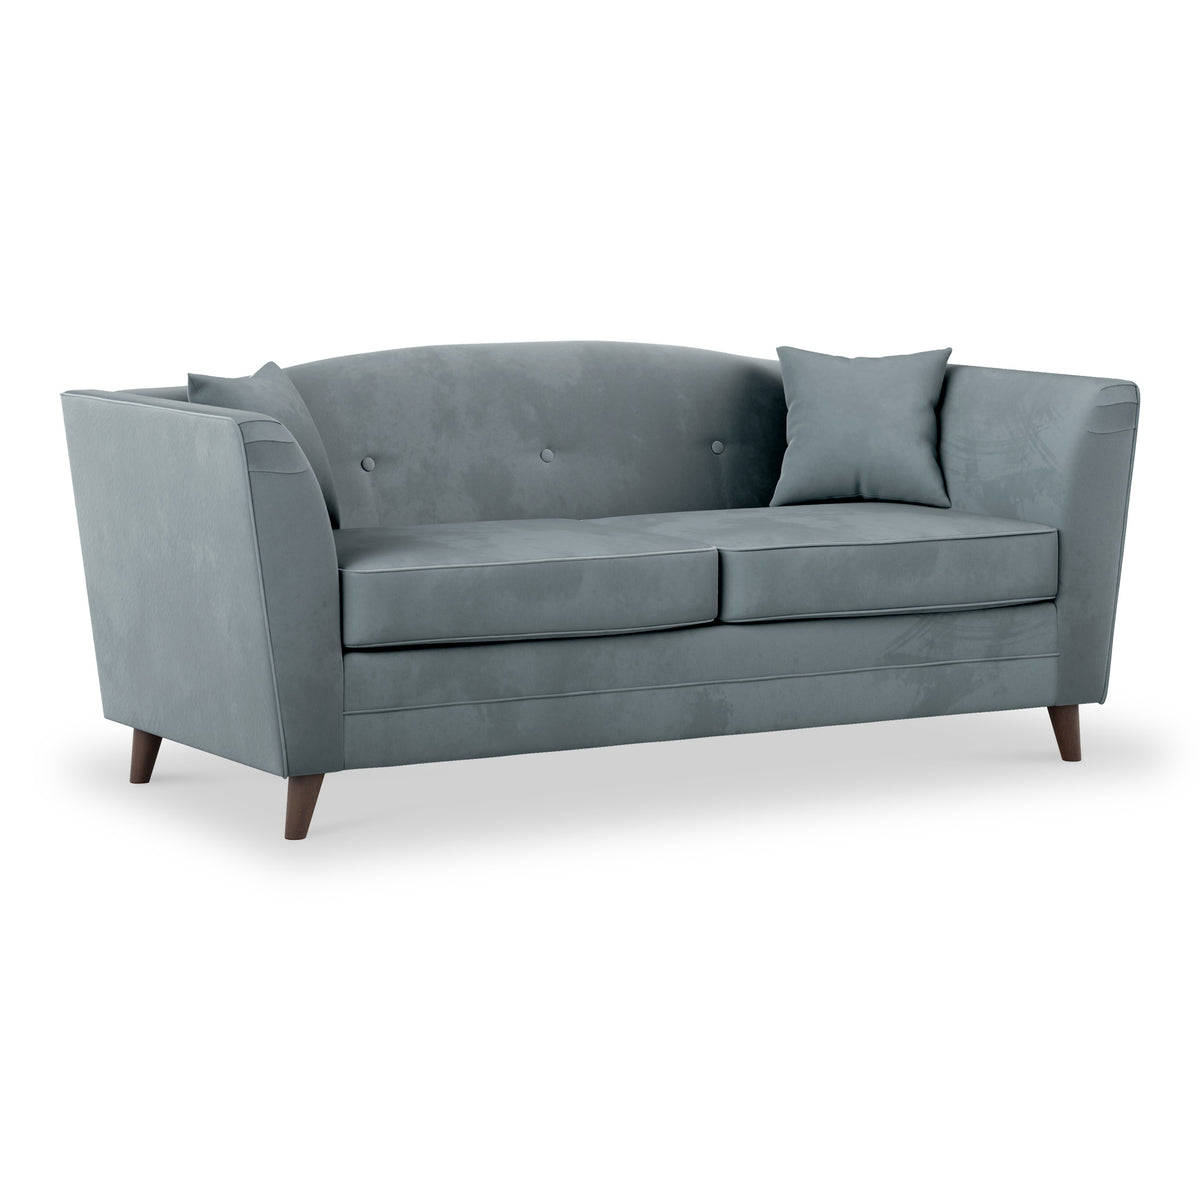 Pippa Airforce Blue Plush Velvet 3 Seater Sofa from Roseland Furniture